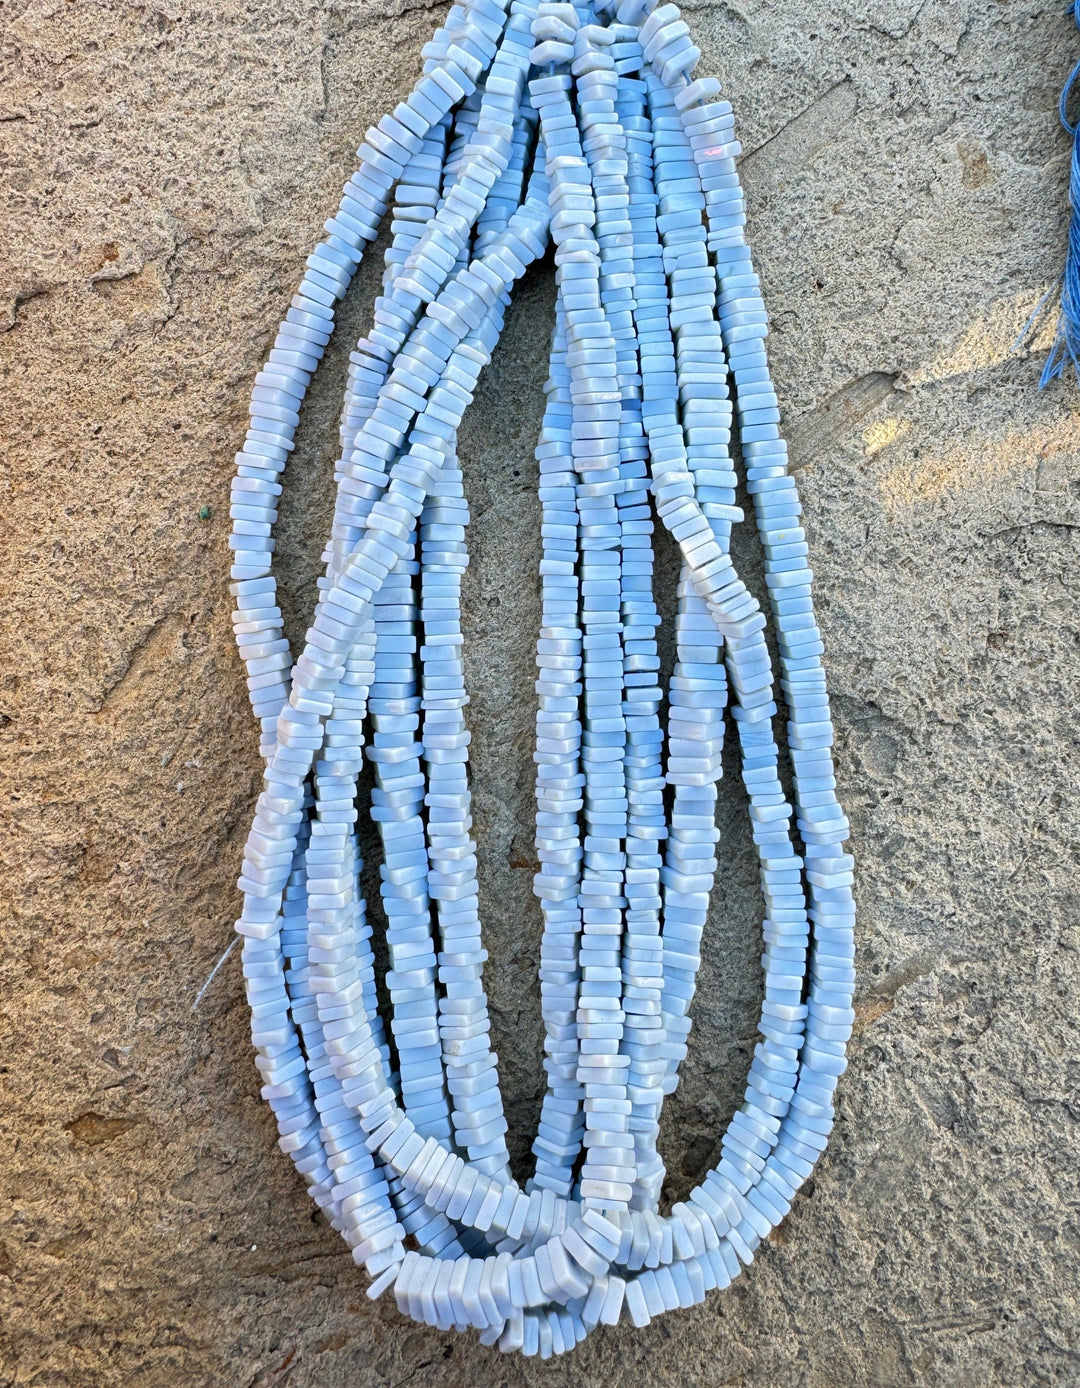 Owyhee Blue Opal (Oregon) 5-6mm Square Heishi Shaped Beads